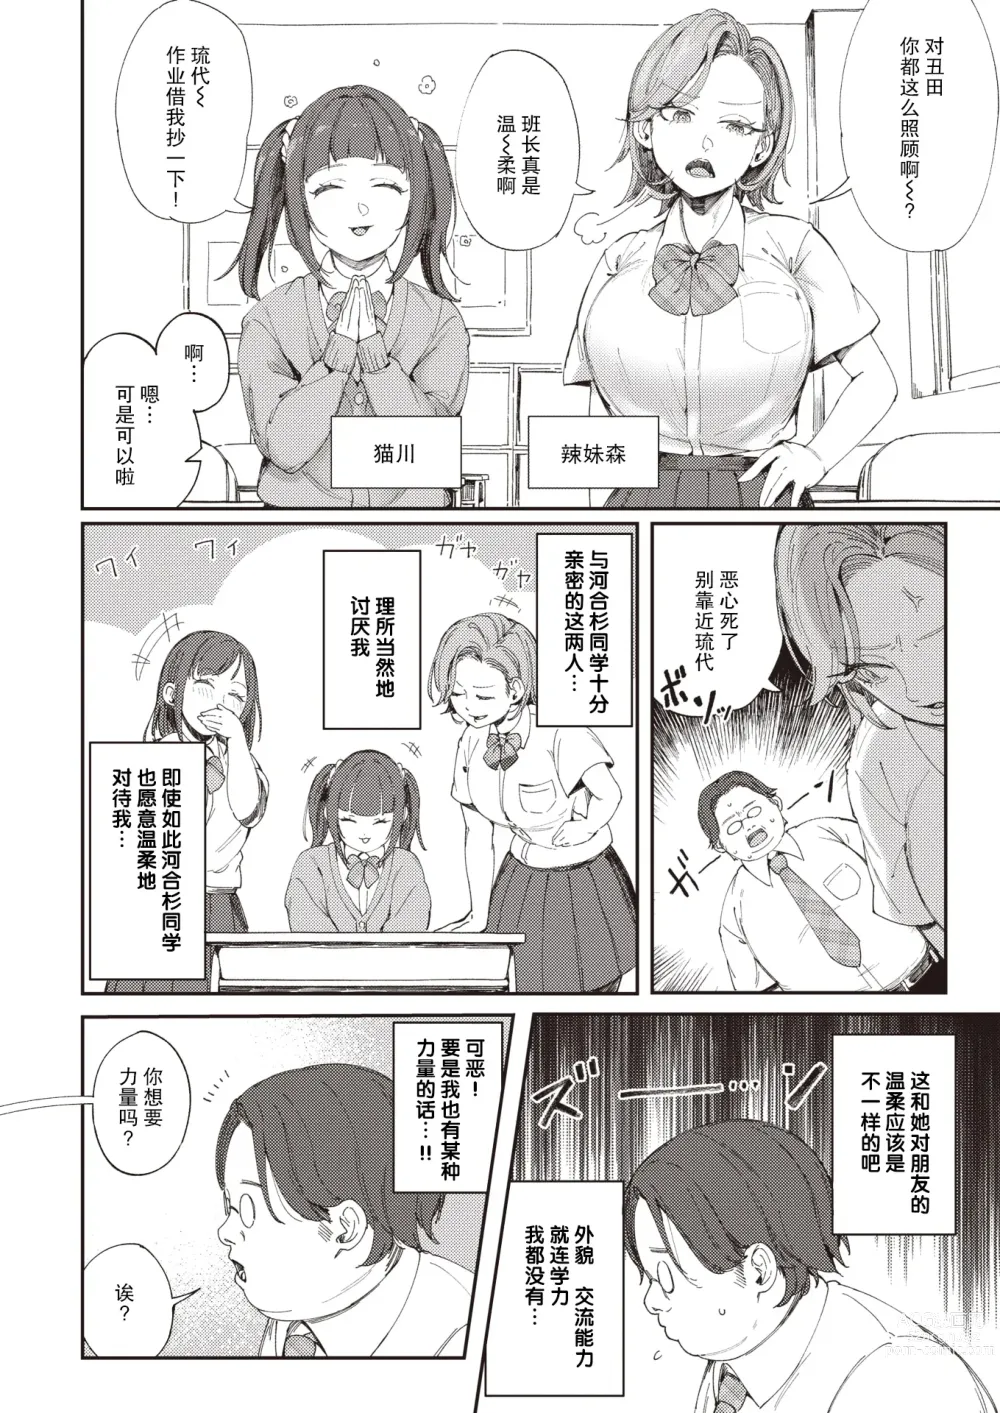 Page 3 of manga ERO ACTION REPLAY!!